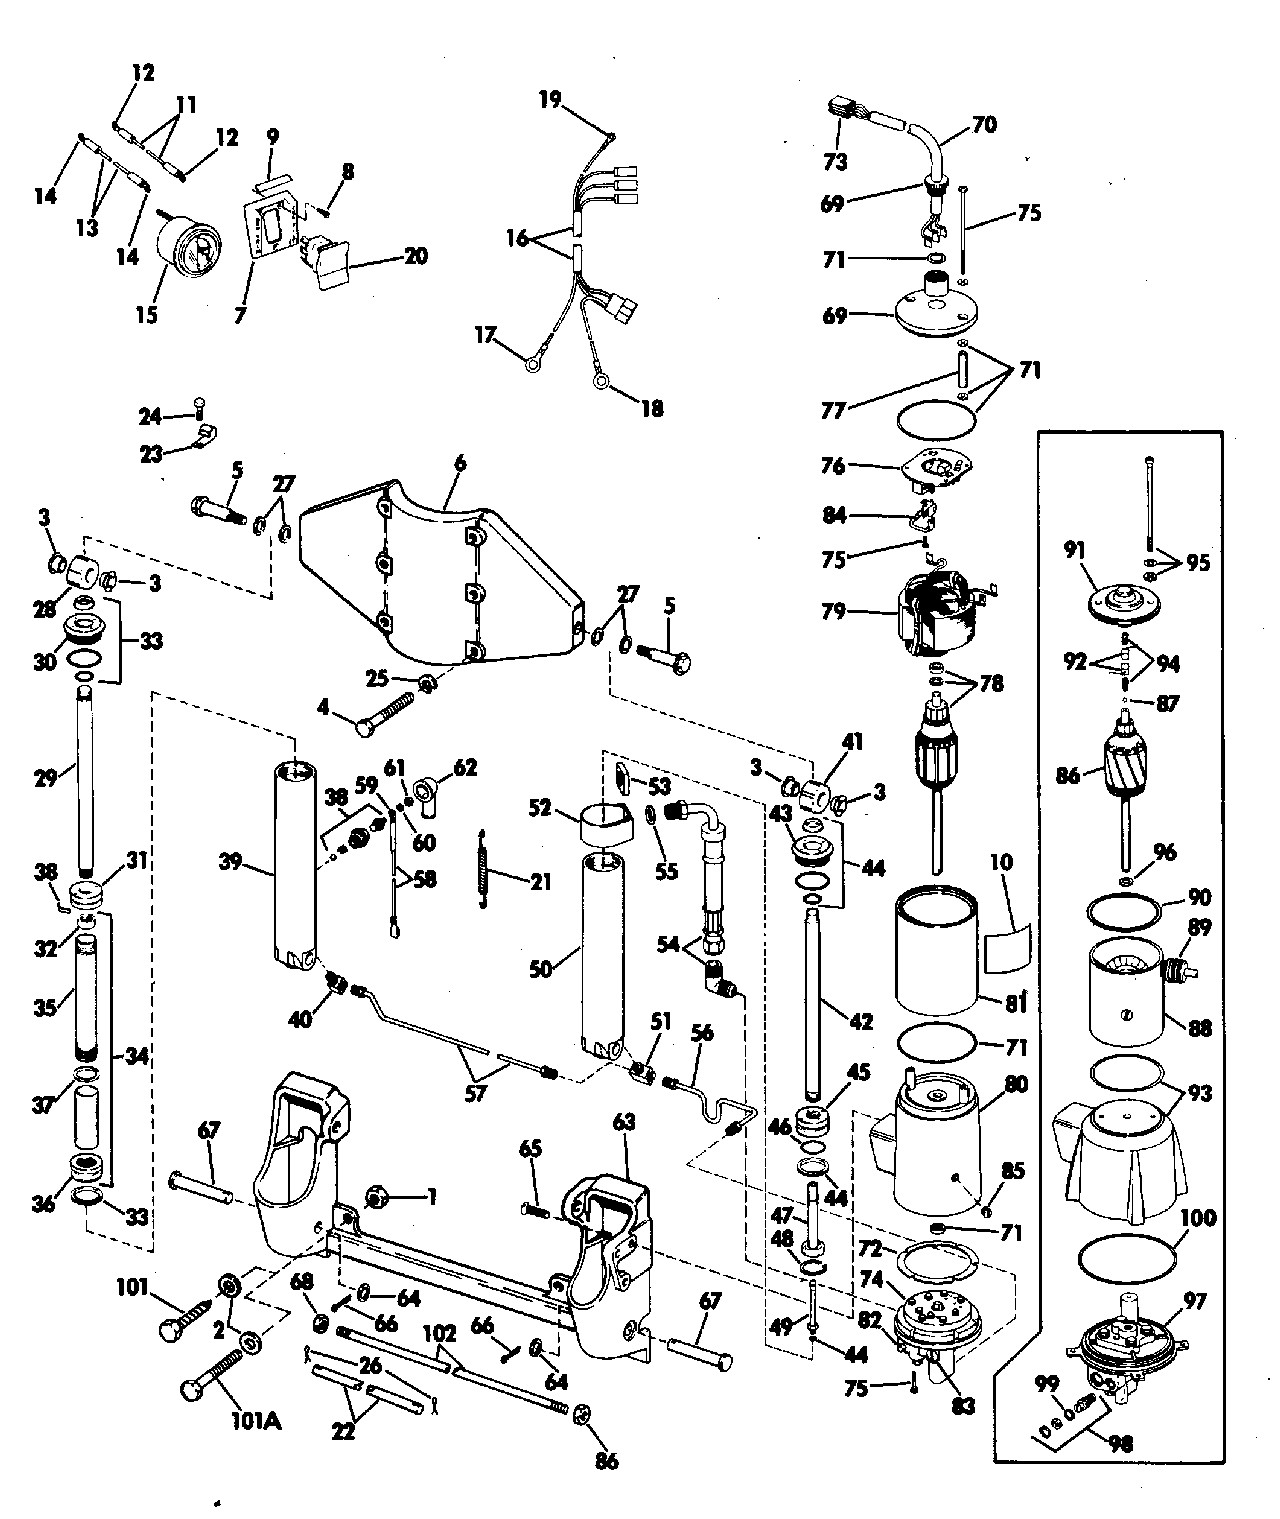 Evinrude Etec Parts Diagram Power Tilt and Trim 50 Hp Electrical 1974 Accessories for 1974 Of Evinrude Etec Parts Diagram